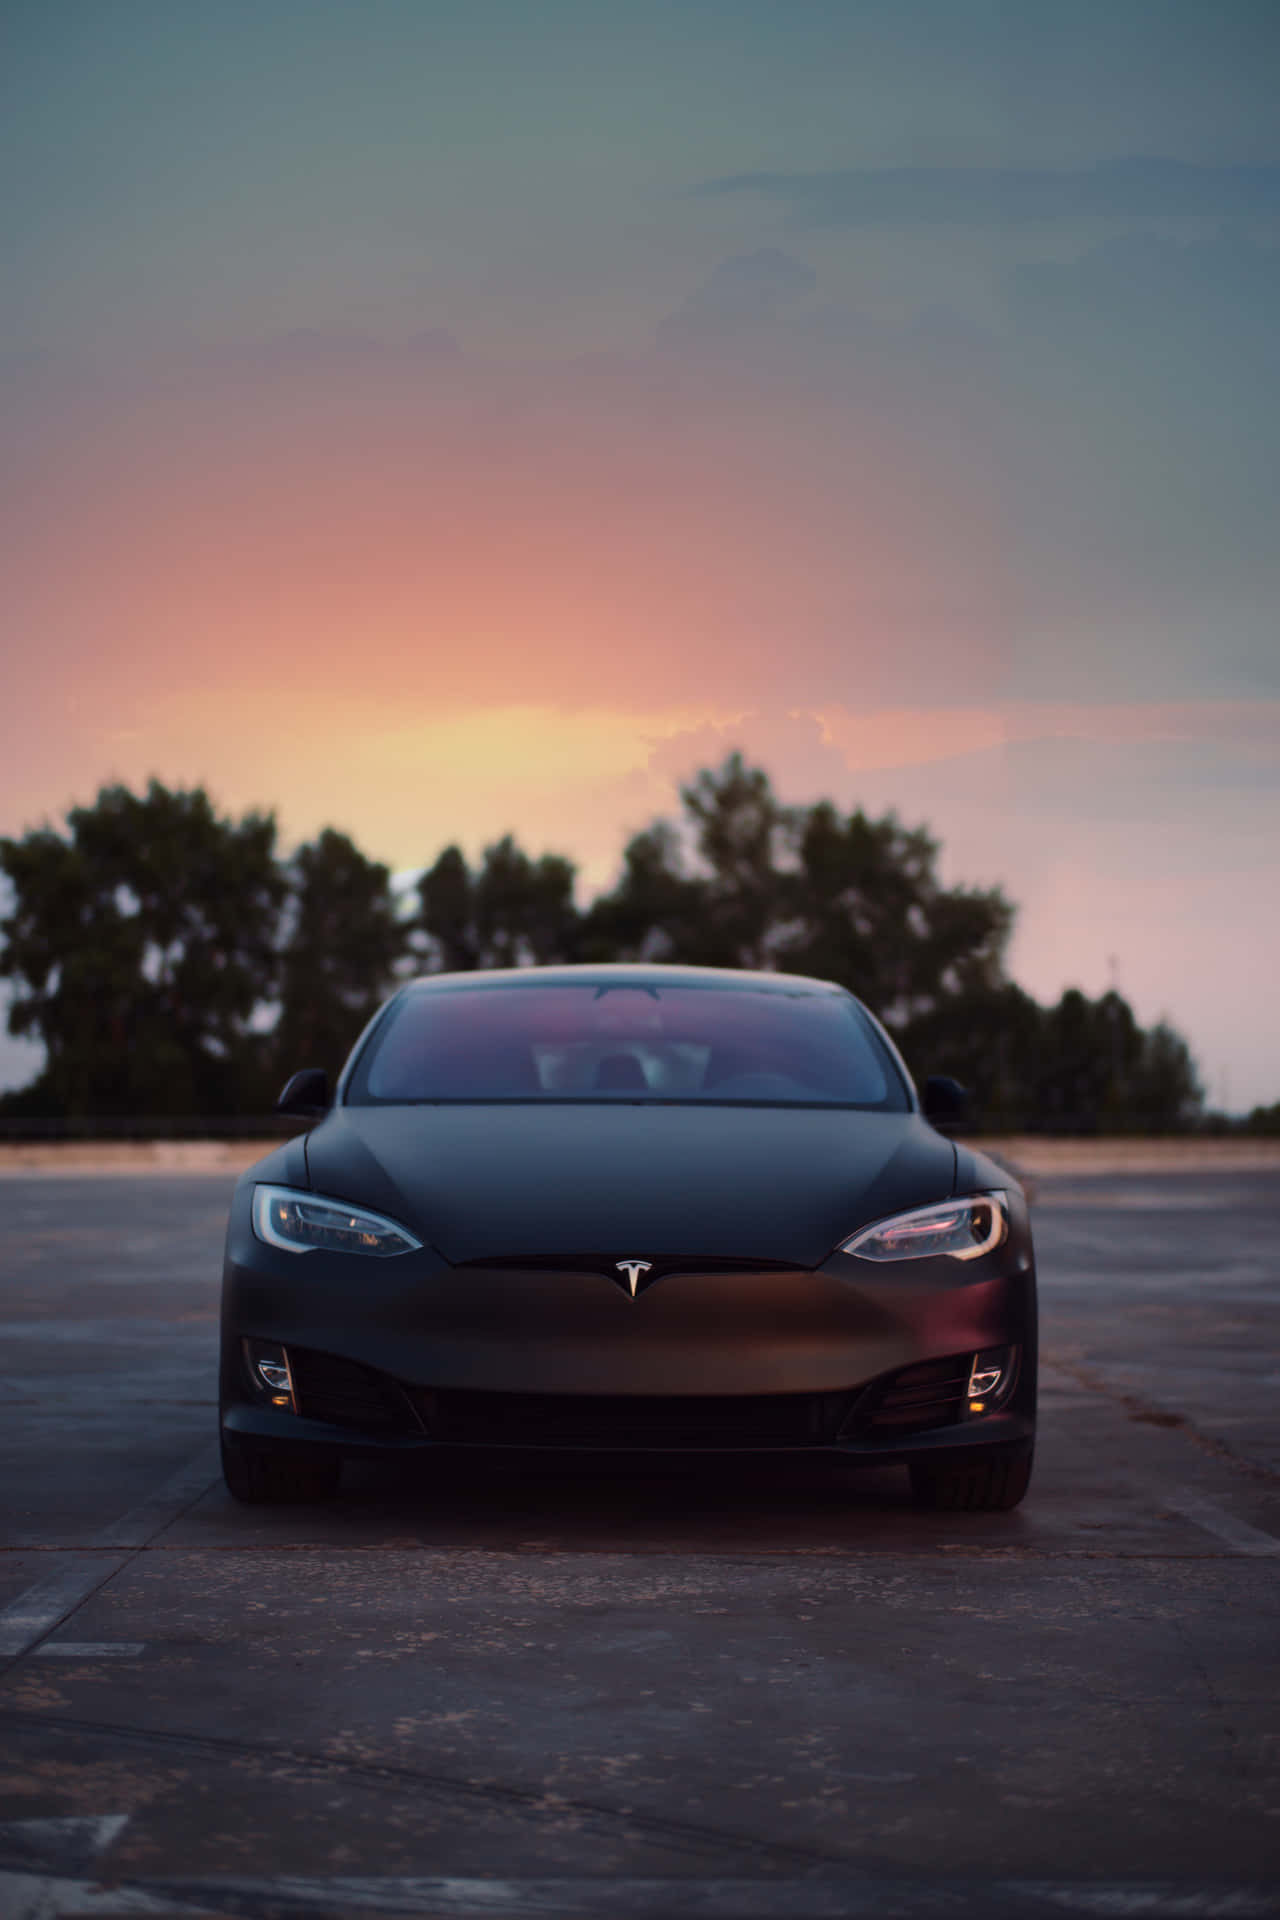 "Tesla vehicles - eco-friendly luxury driving."